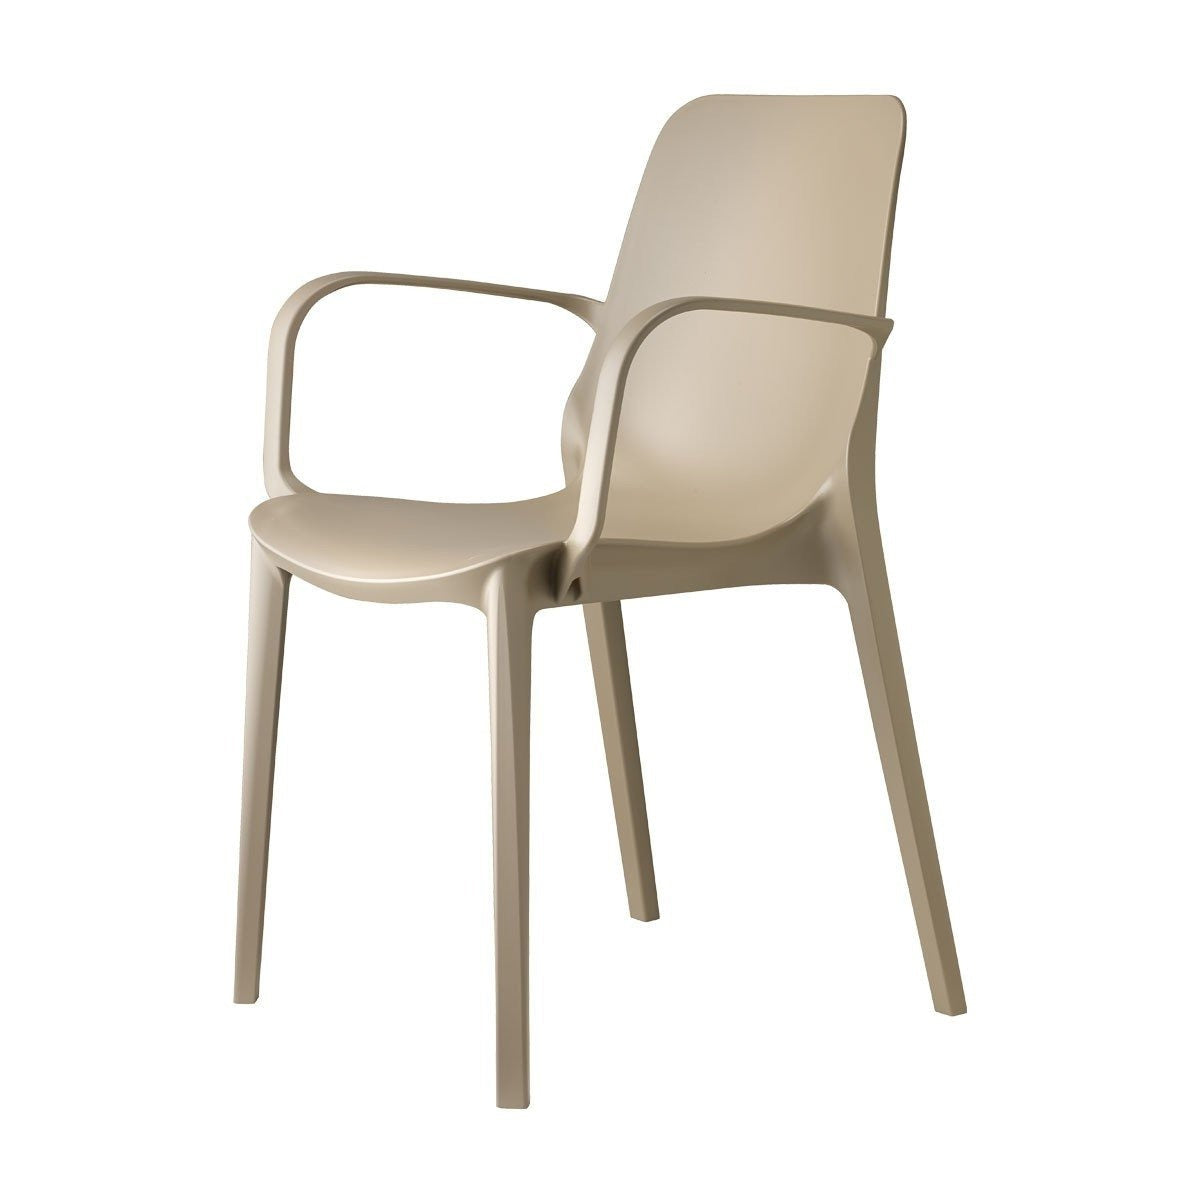 Ginevra plastic garden armchair by Scab Design - myitalianliving